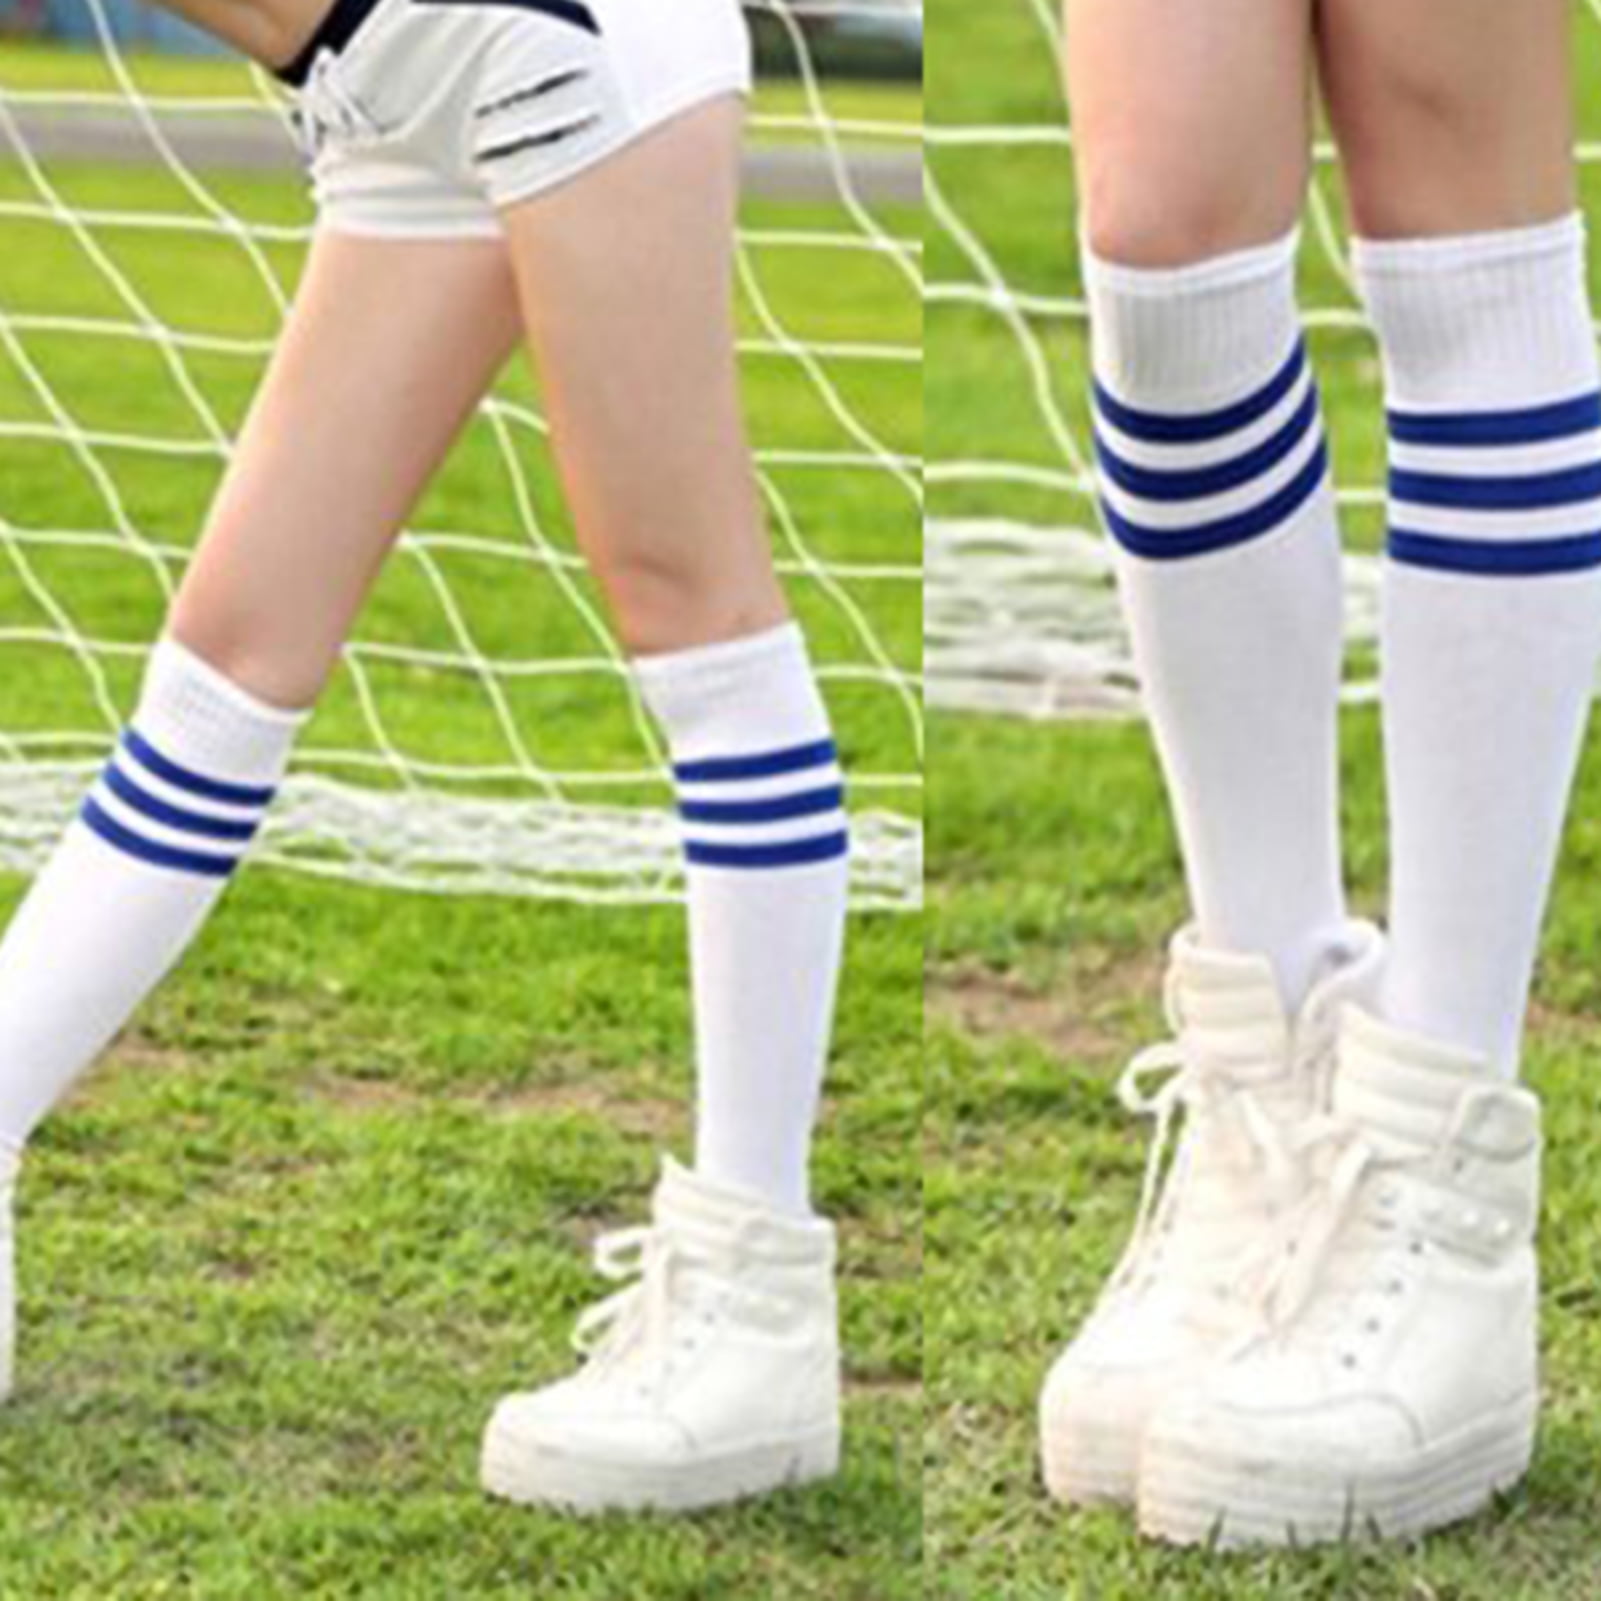 Bright-carrot Unisex Funny Casual Crew Socks Athletic Socks For Boys Girls Kids Teenagers